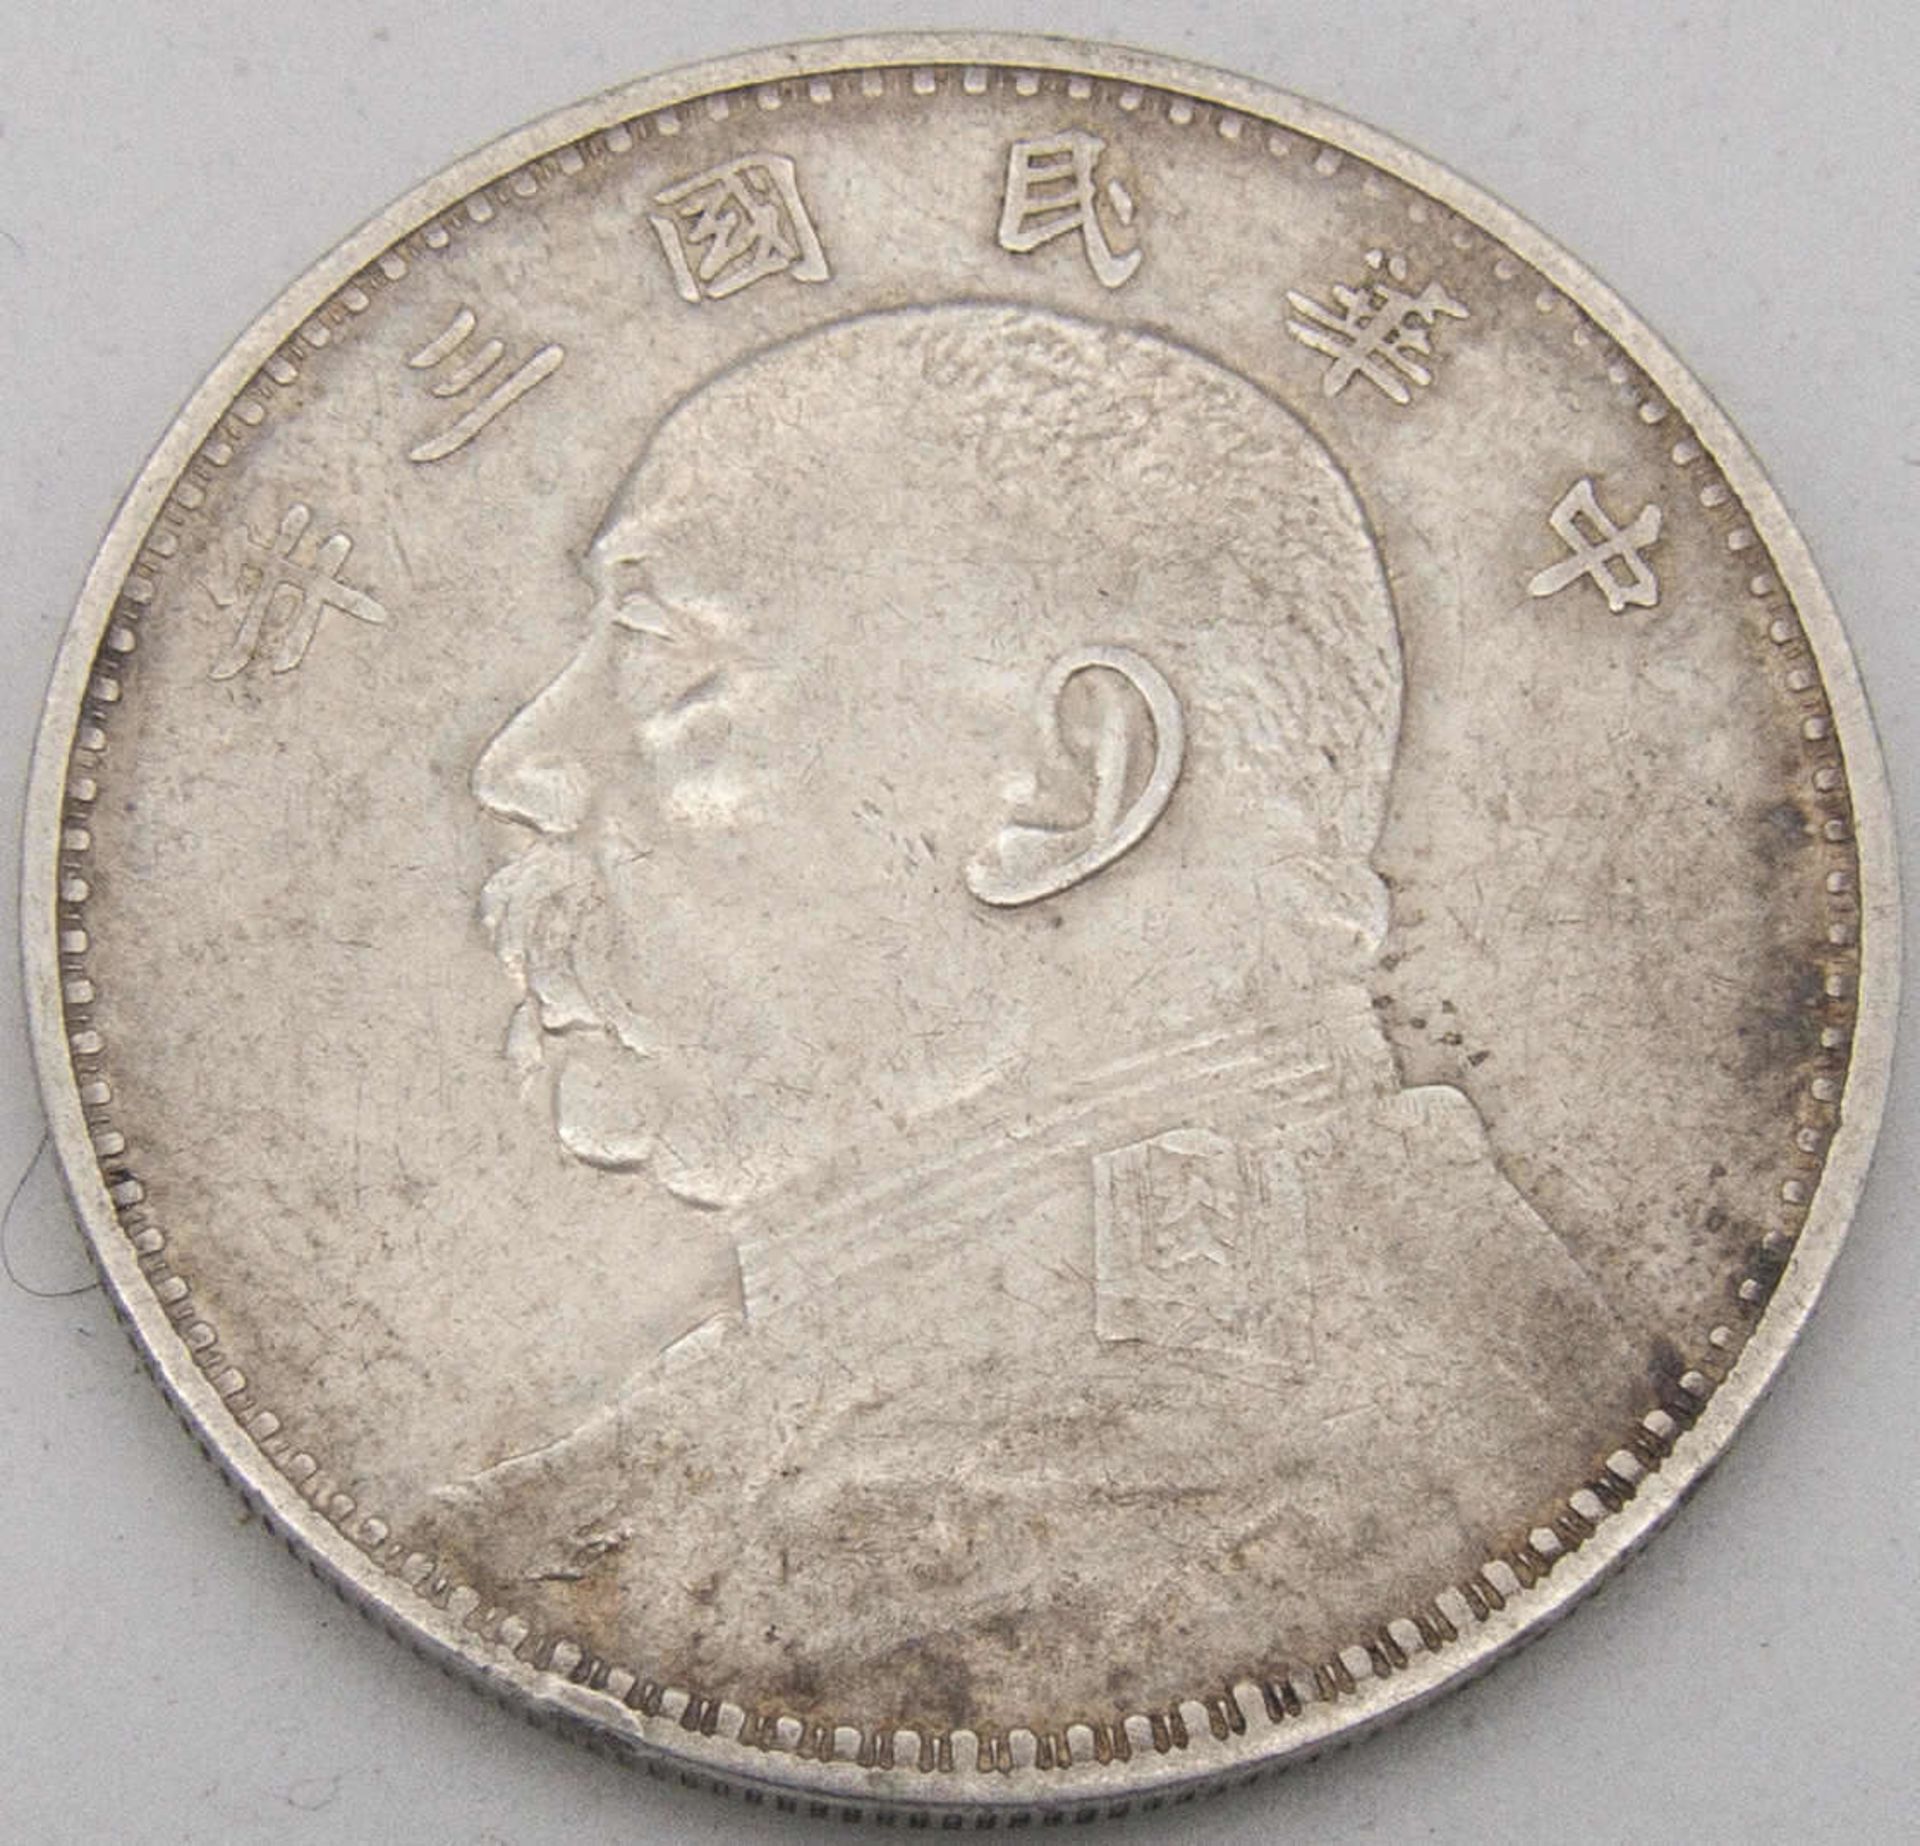 Republik China 1914, Dollar, Jahr 3, Yuan Shih - kai. Erhaltung: ss.Republic of China 1914, Dollars,